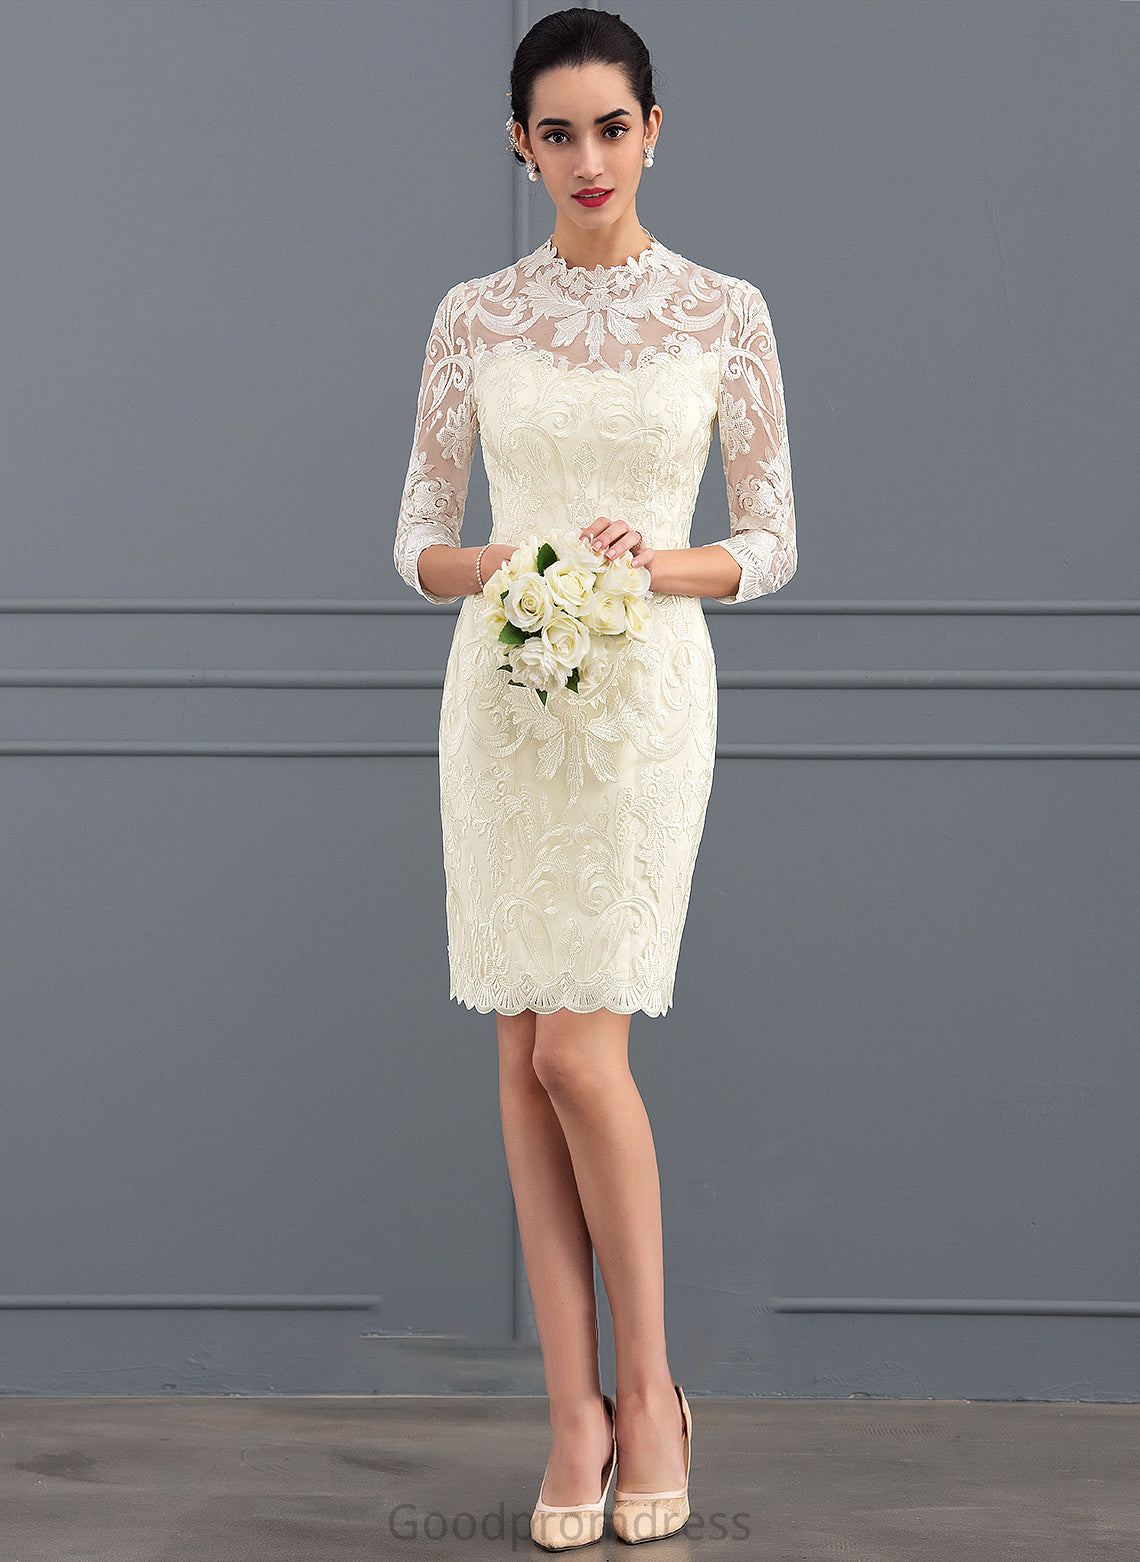 Dress Lace Sheath/Column Alison Knee-Length Wedding Wedding Dresses Neck High